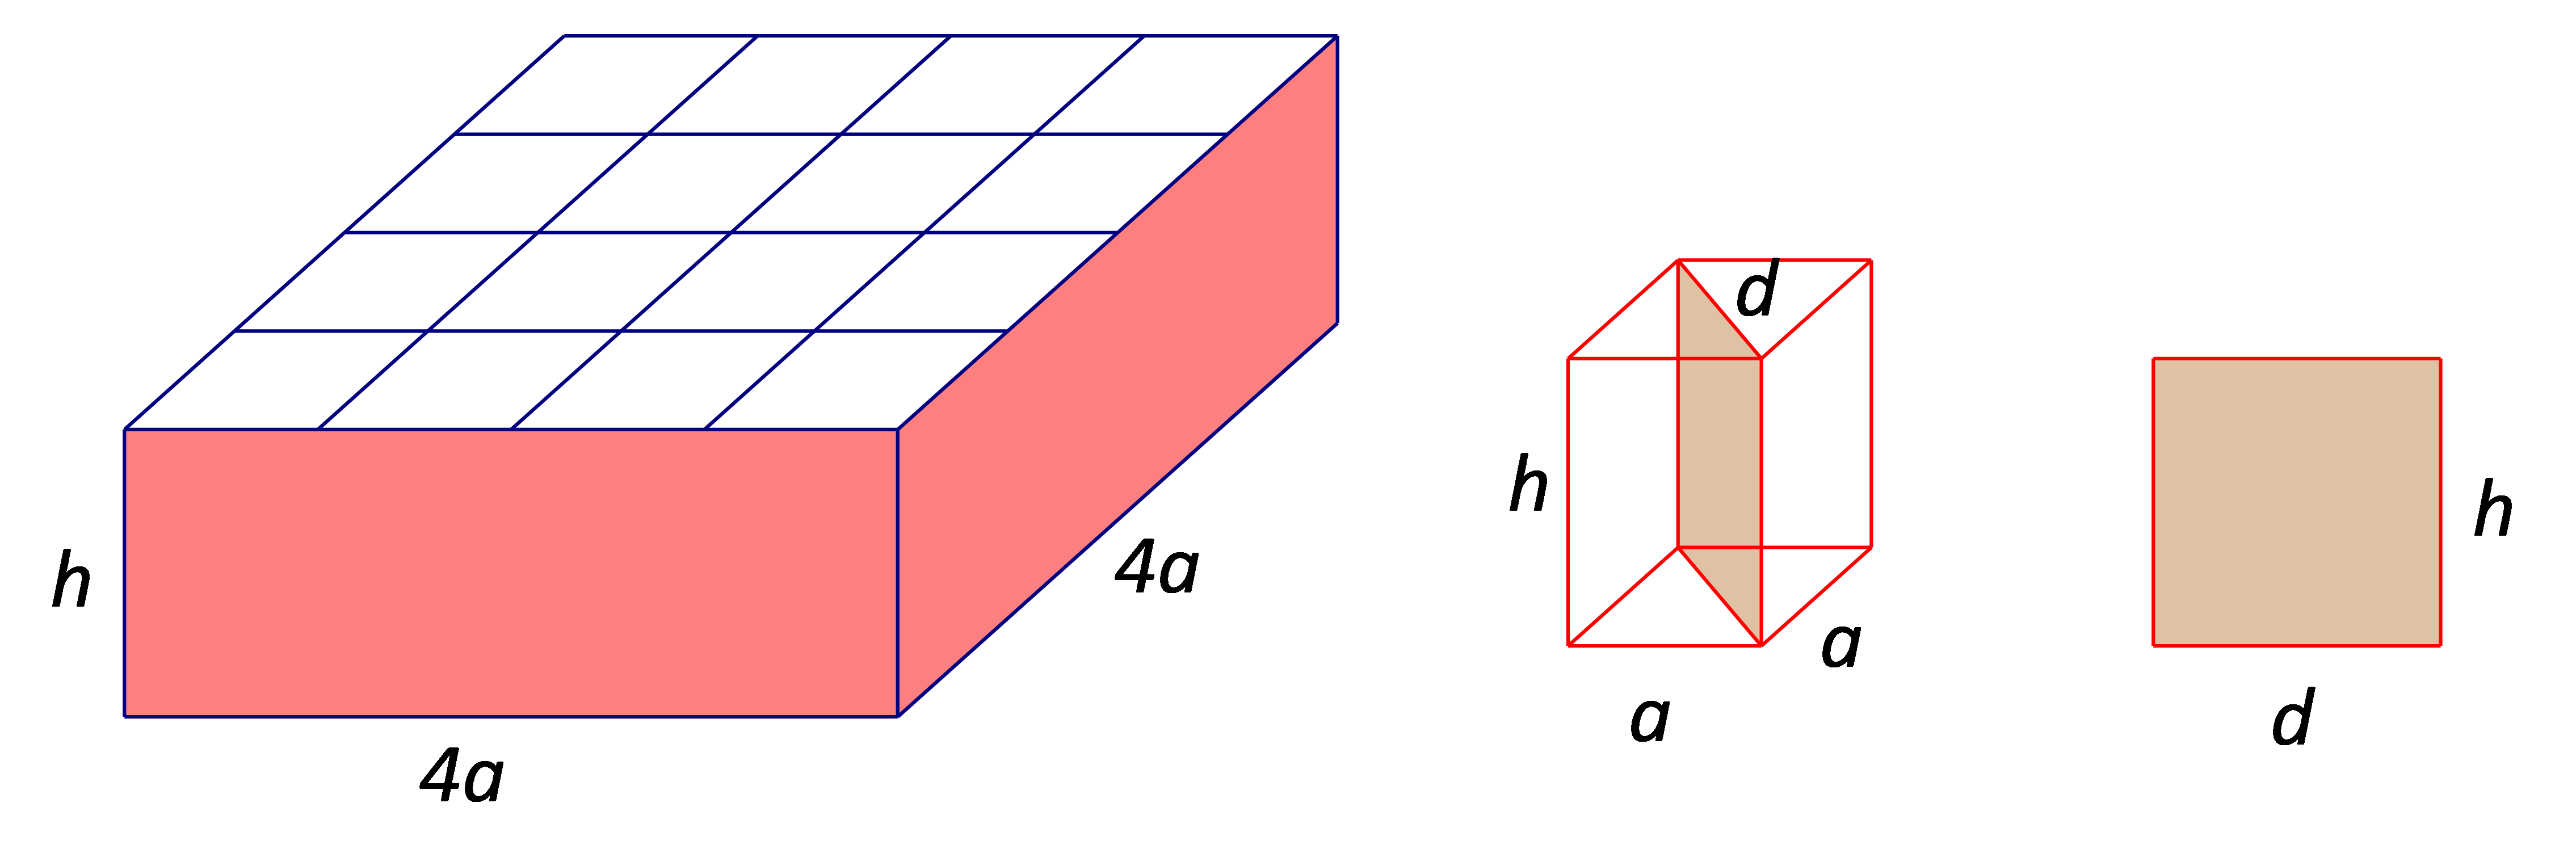 Slika prikazuje tortu u obliku četverostrane prizme prema uputama iz zadatka te njezin dijagonalni presjek.